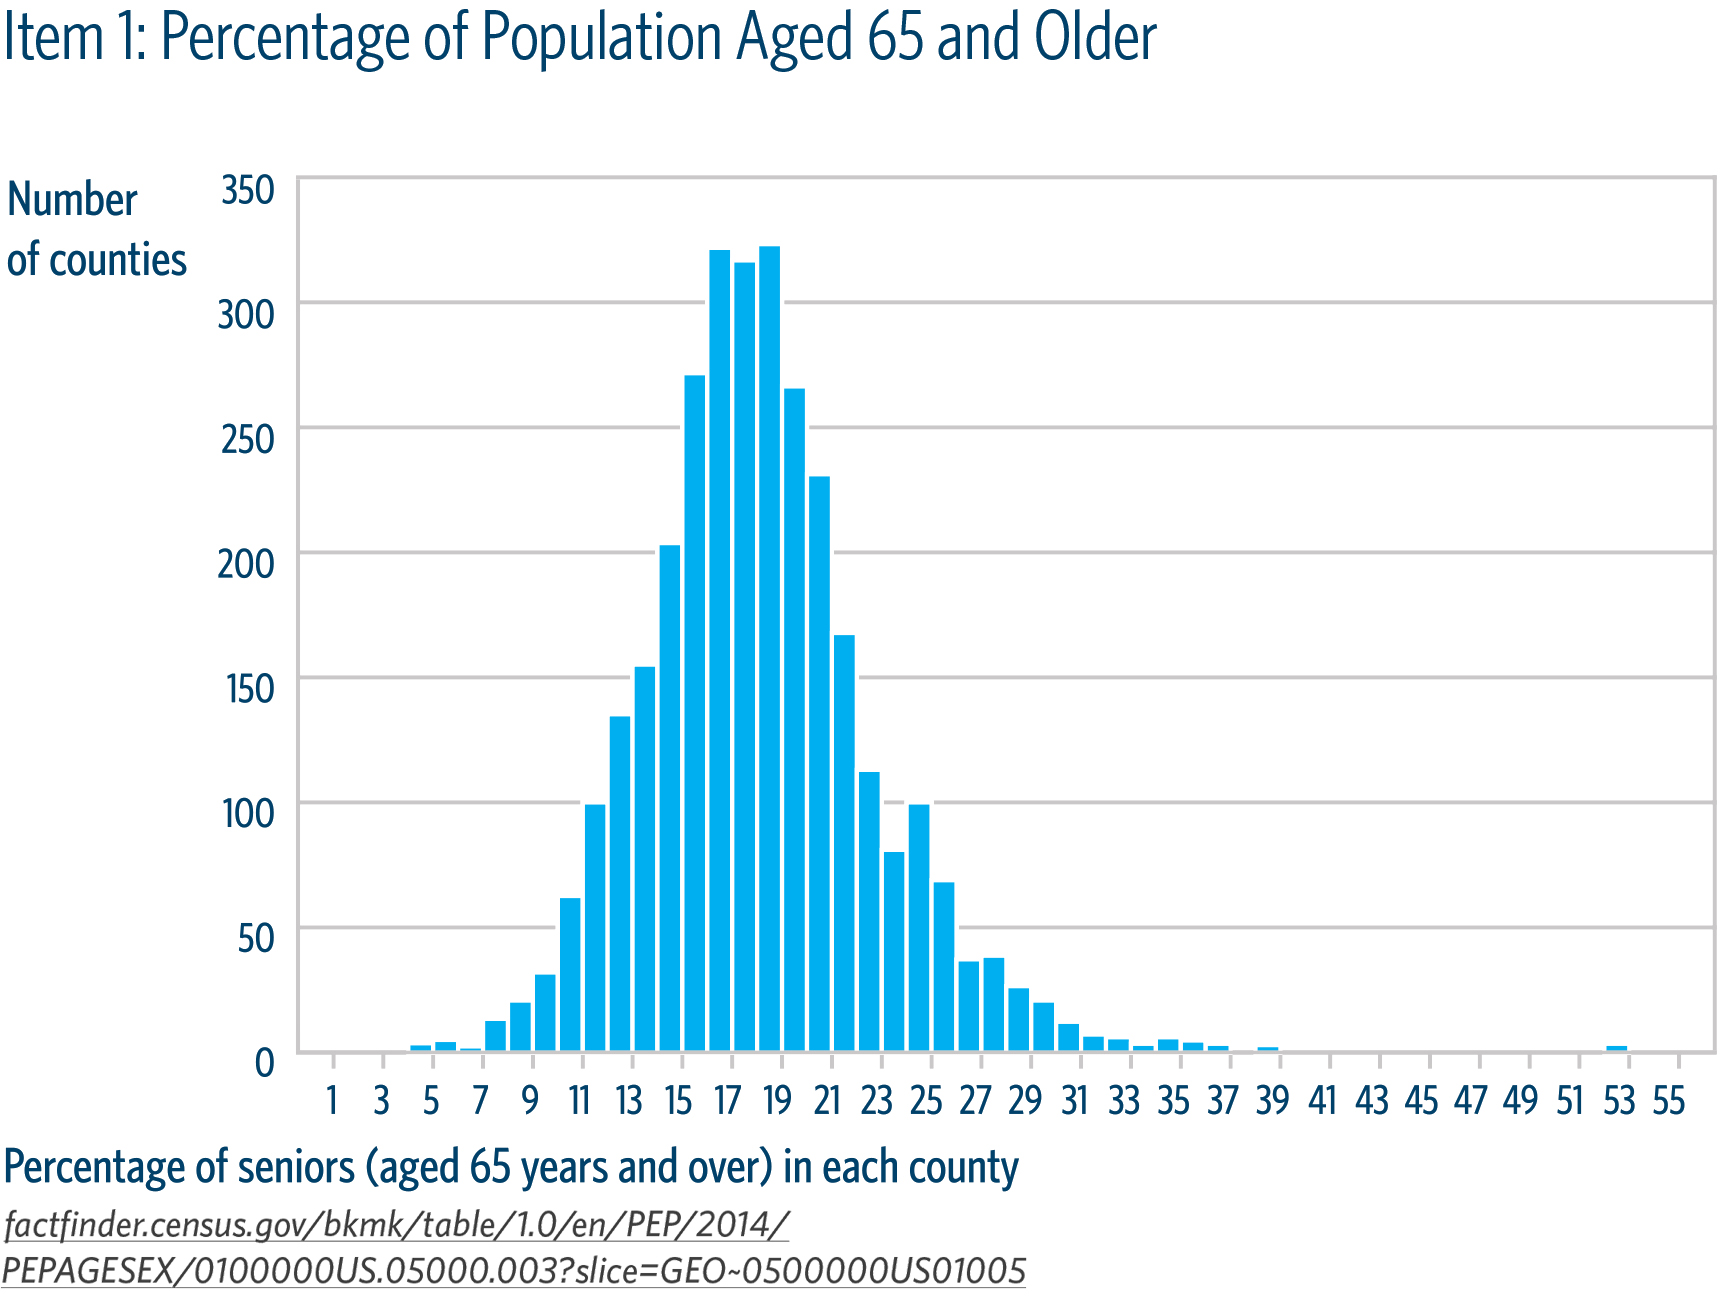 Item 1: Percentage of Population Aged 65 and Older